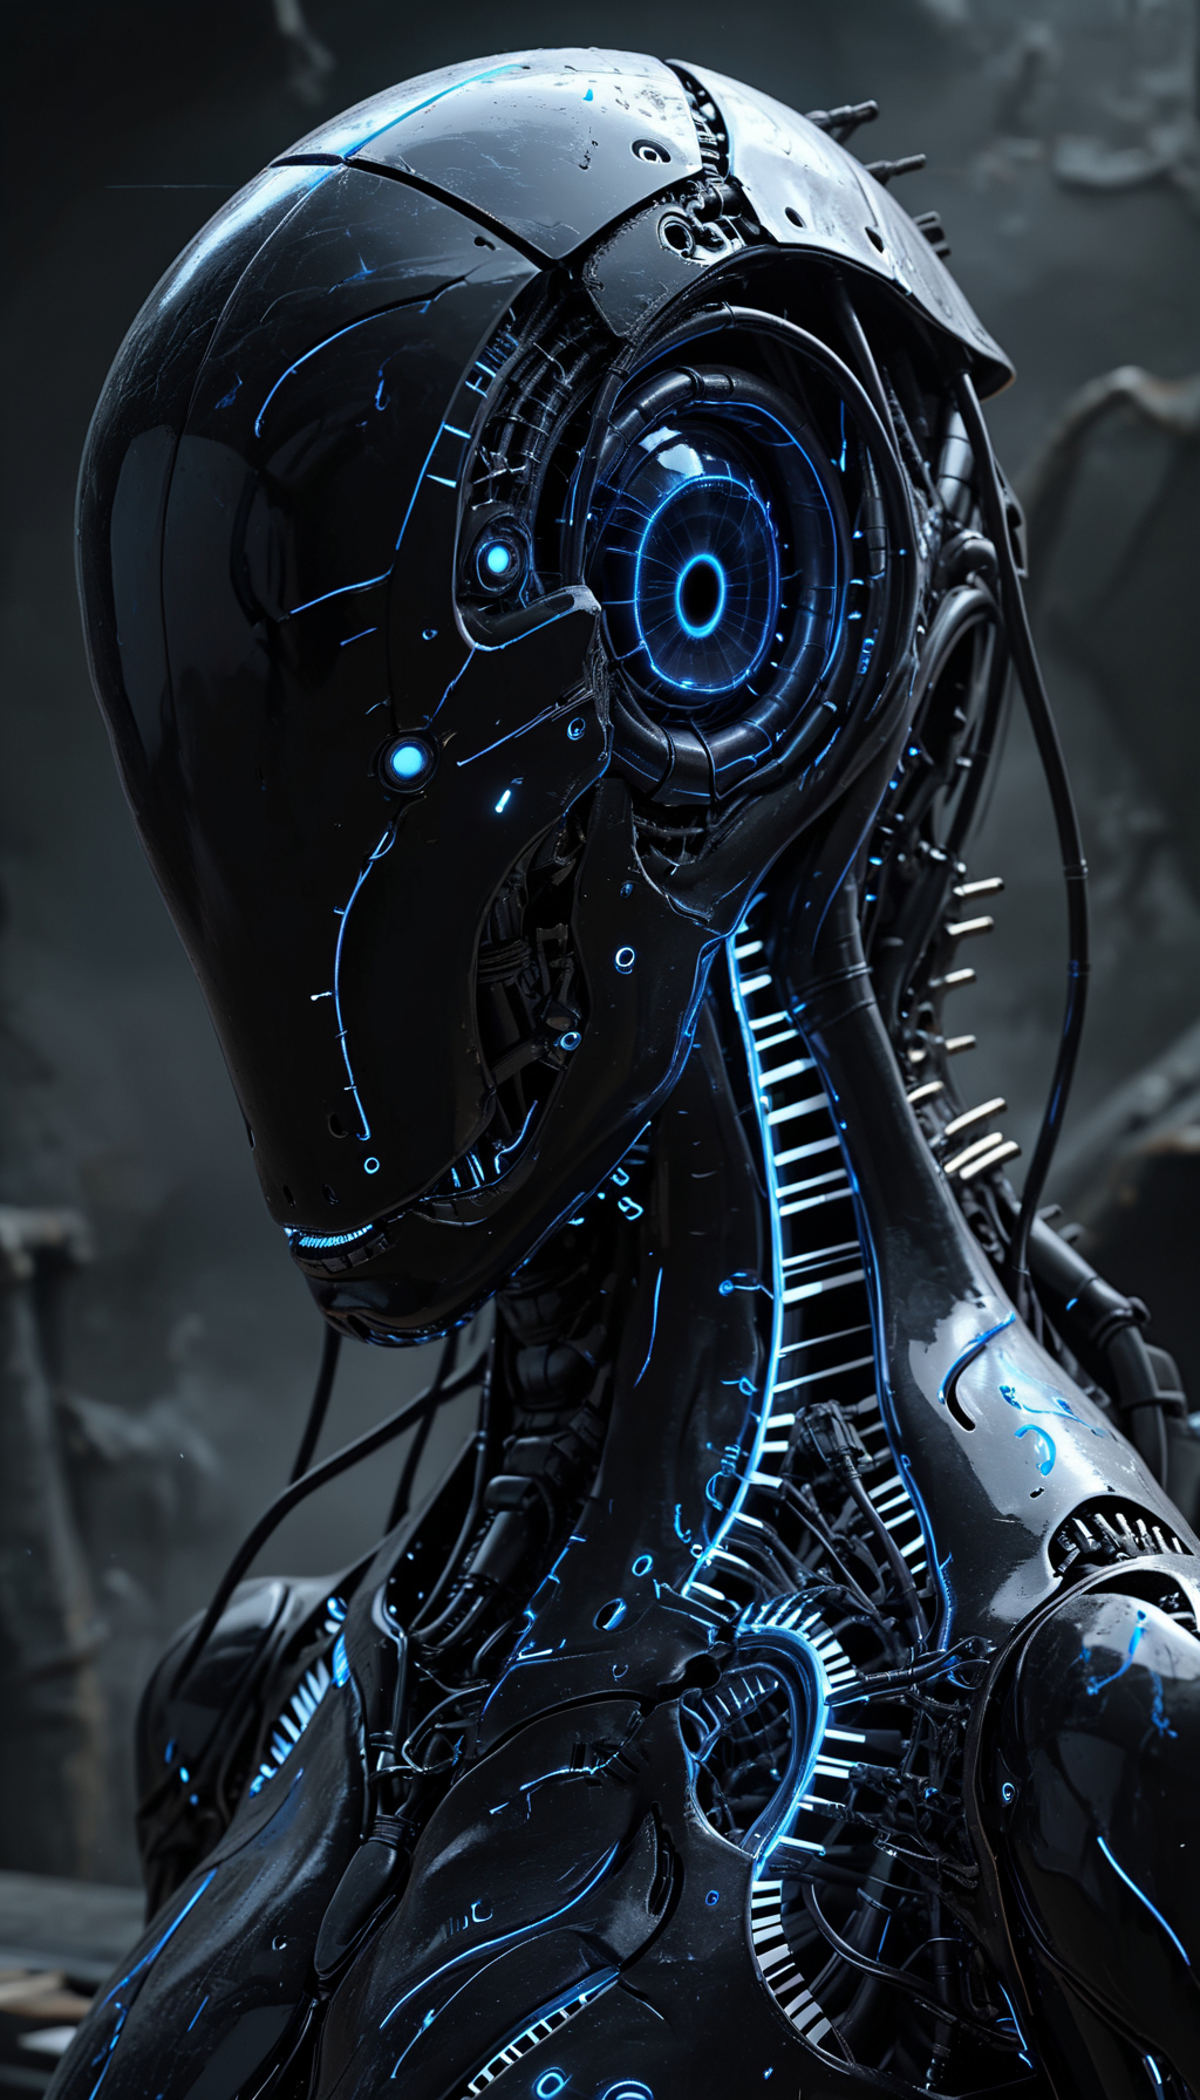 Faceless Cyborgs image by StecFX